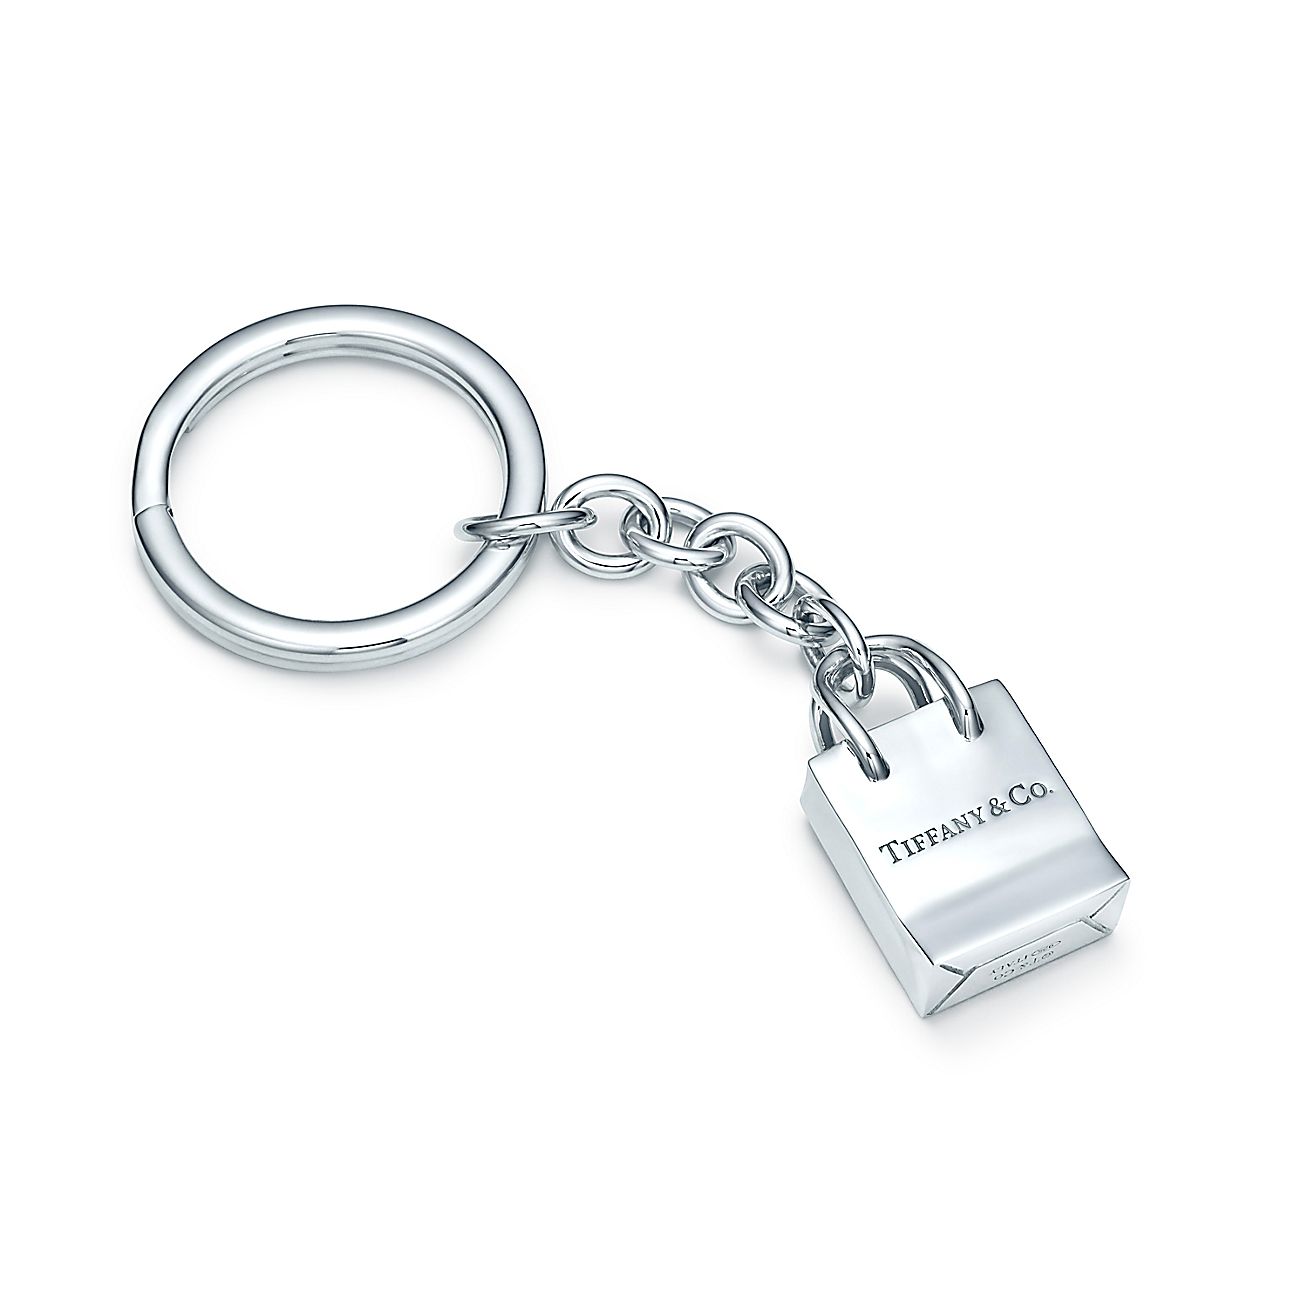 Tiffany Shopping Bag key ring in sterling silver. | Tiffany & Co.